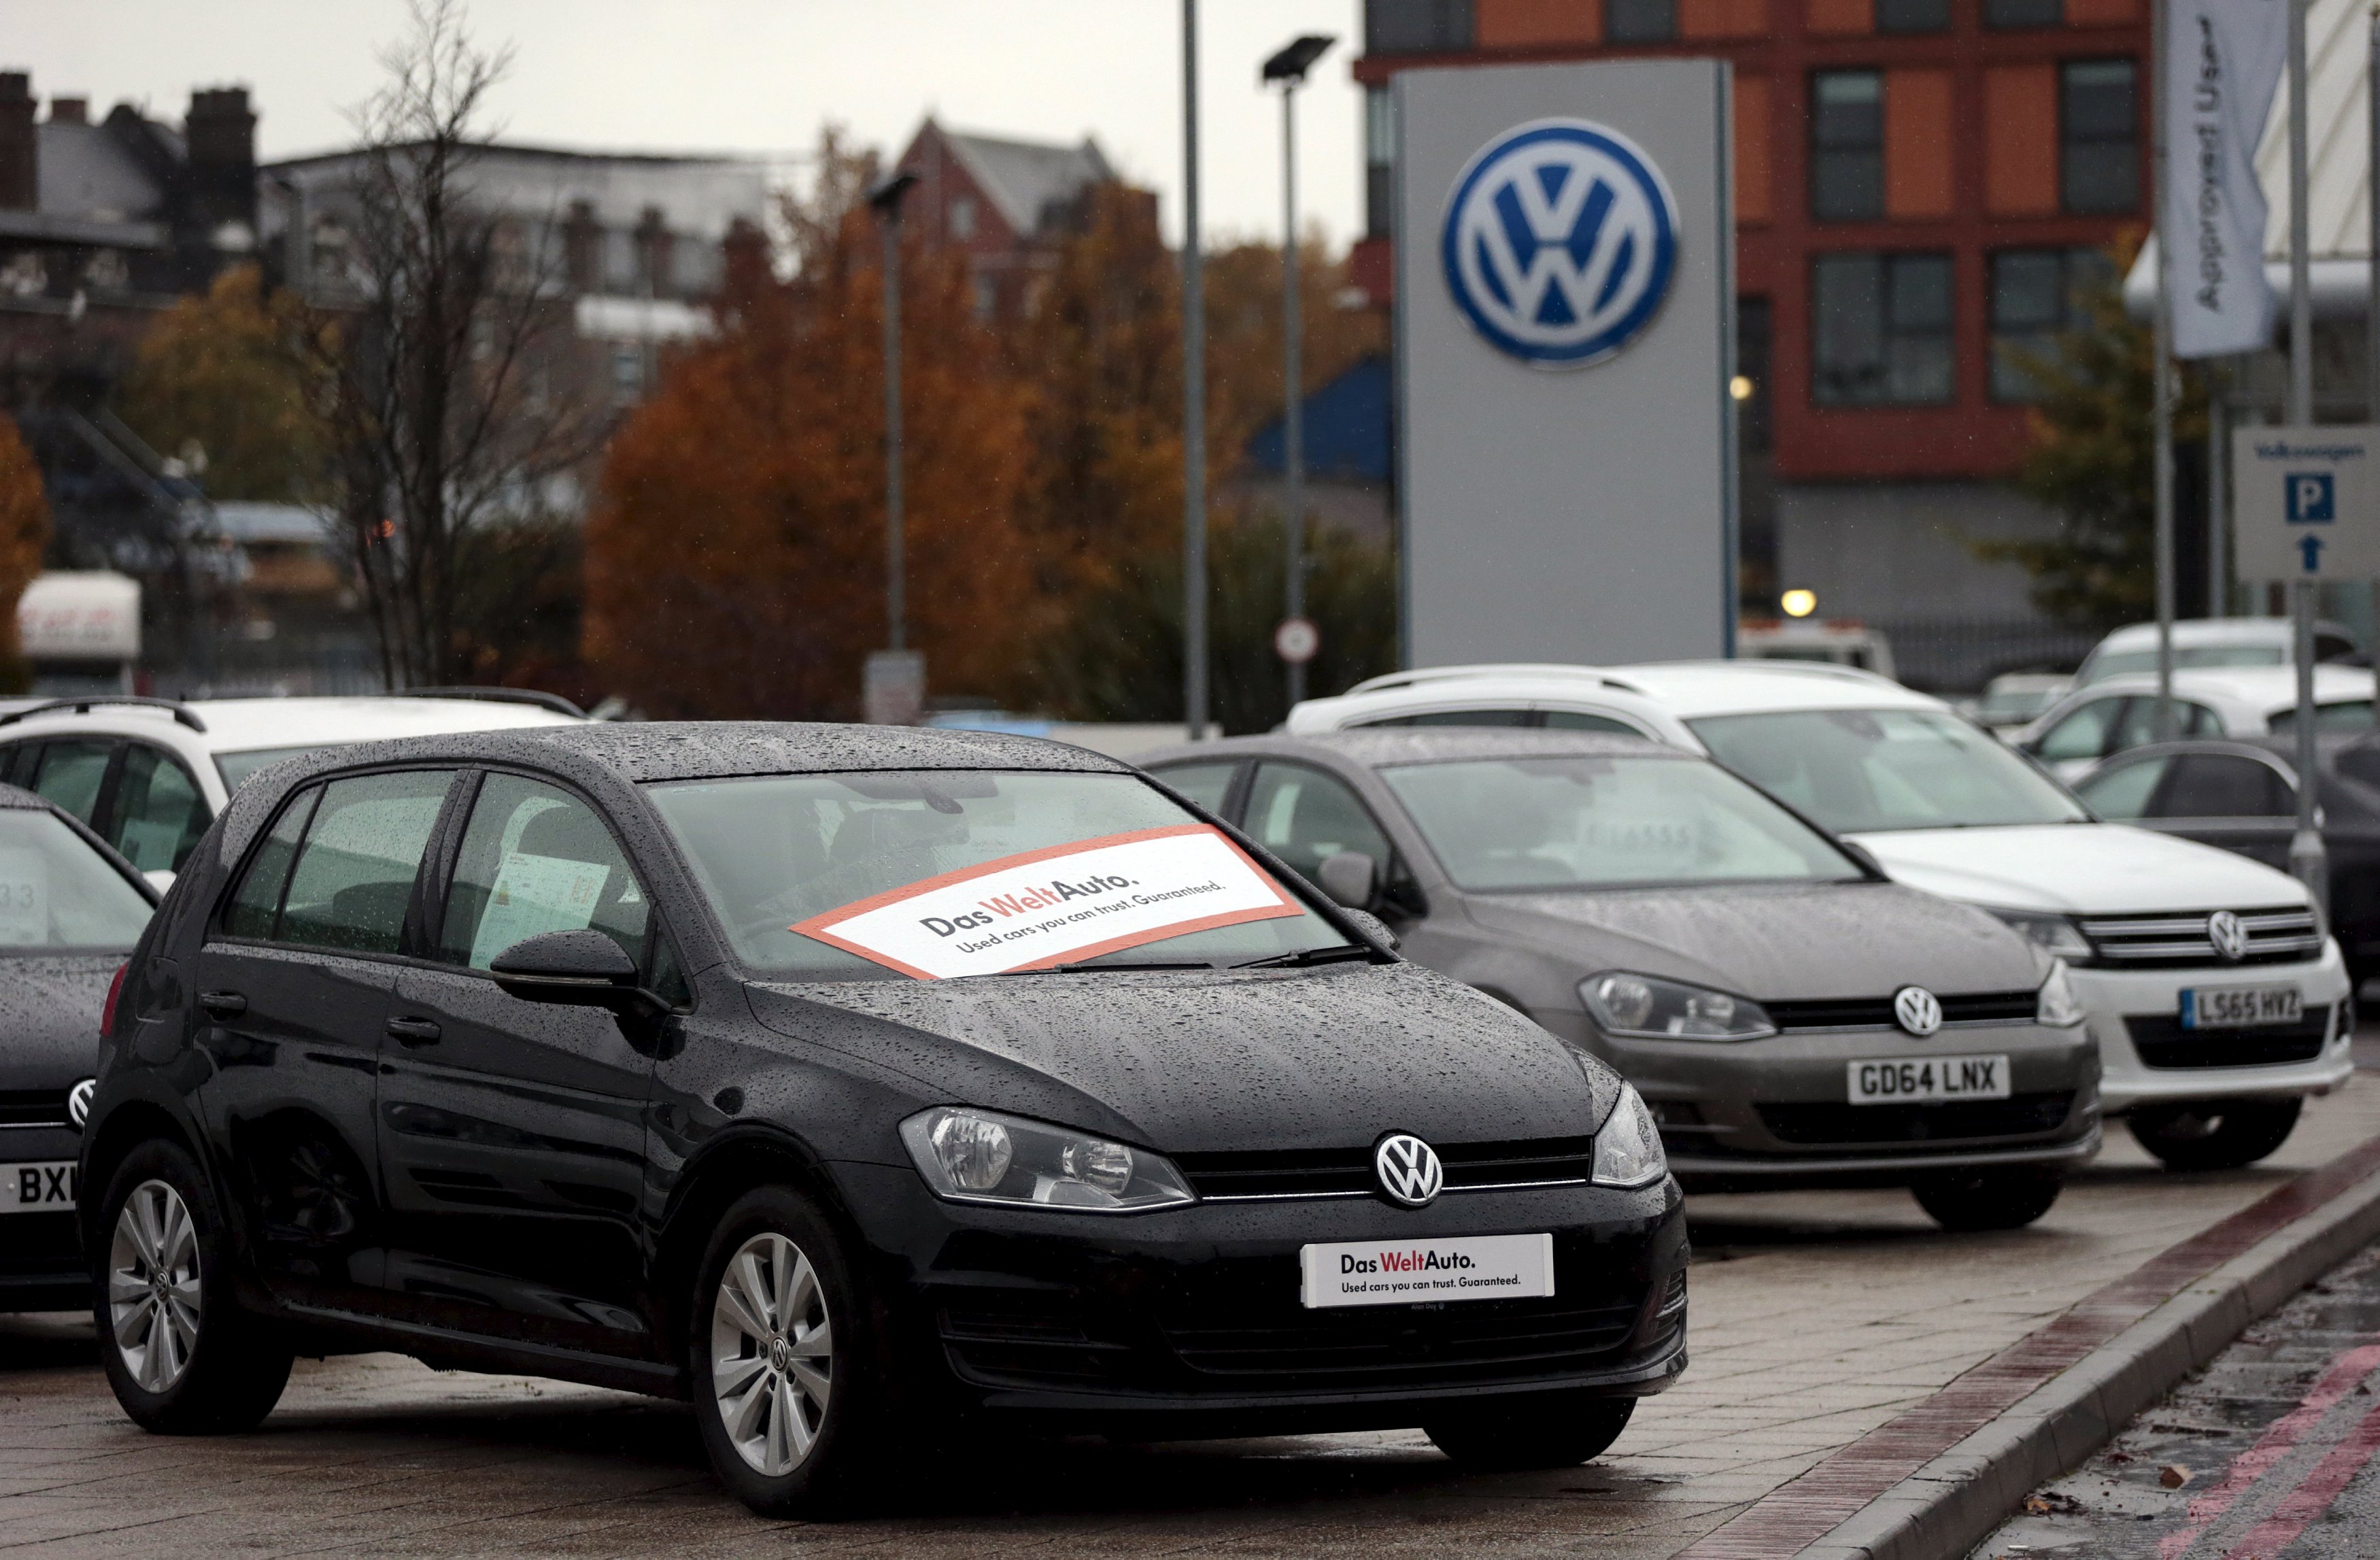 Francia corrobora fraude de Volkswagen